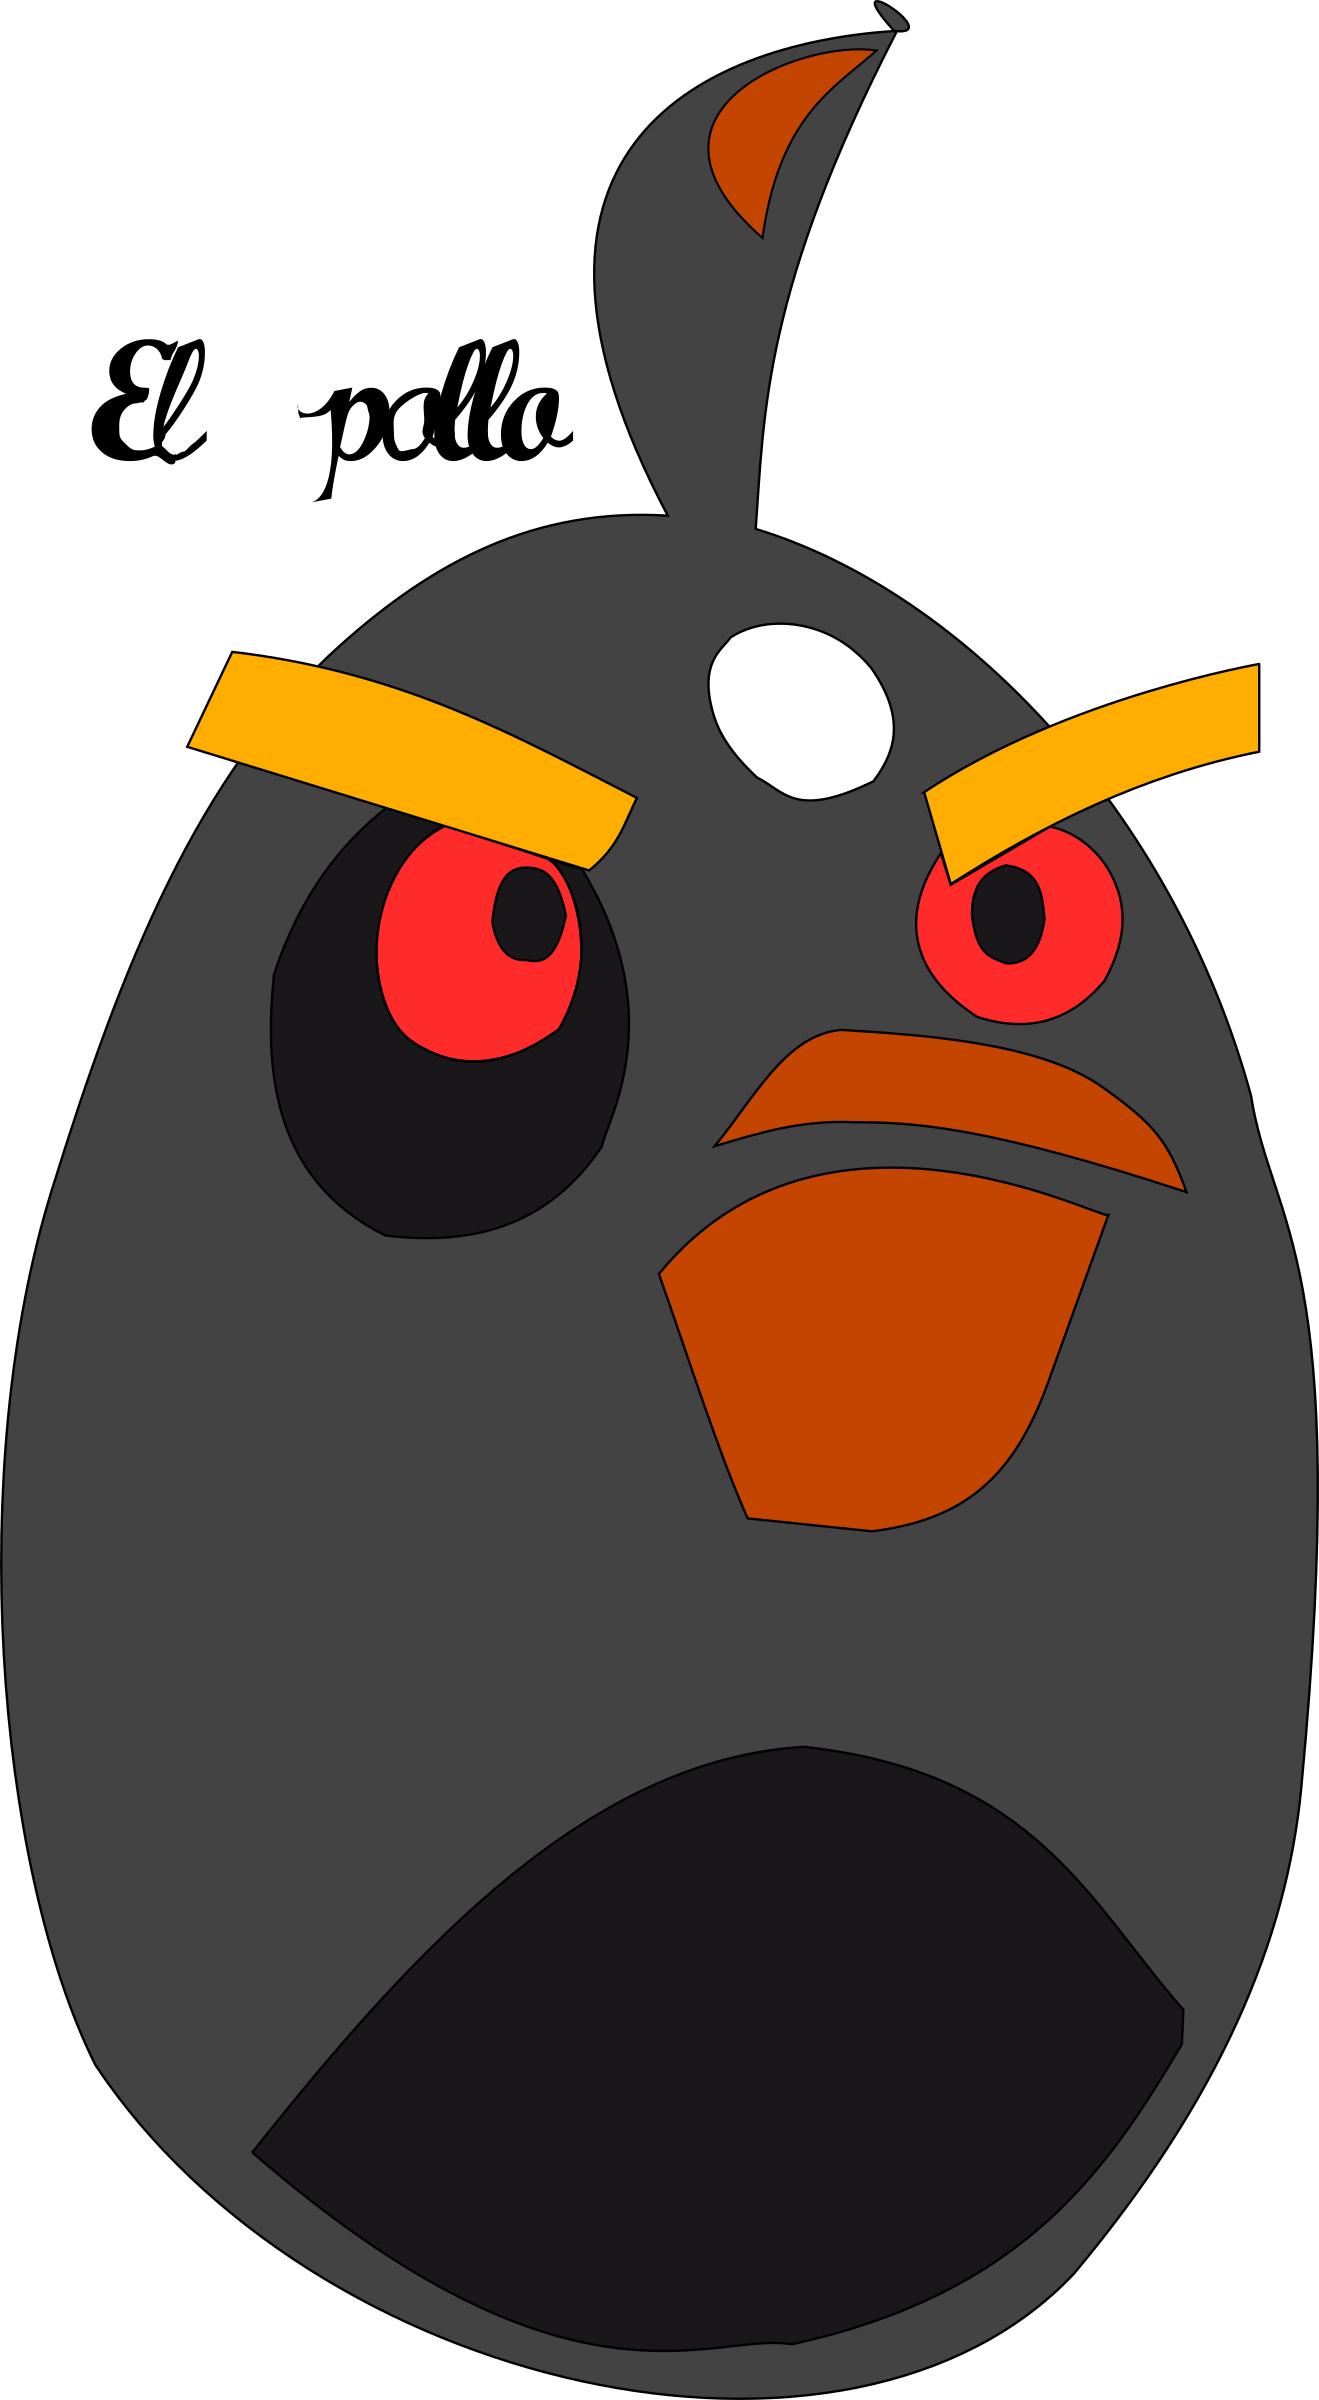 El pollo angry icons